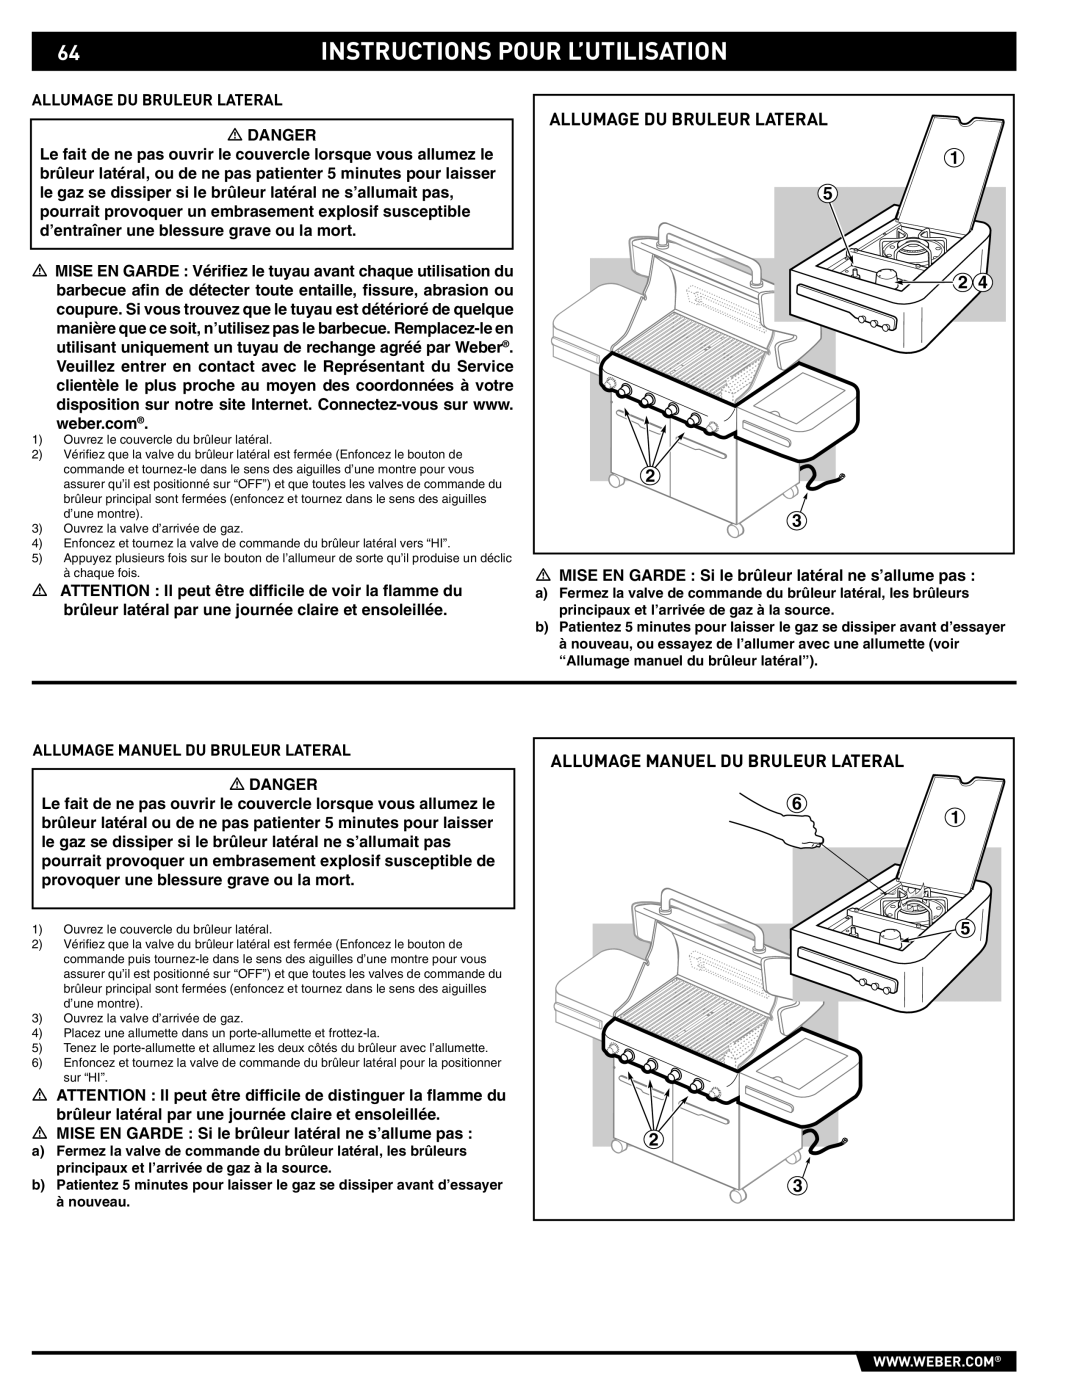 Weber 89561 manual Allumage DU Bruleur Lateral, Allumage Manuel DU Bruleur Lateral 